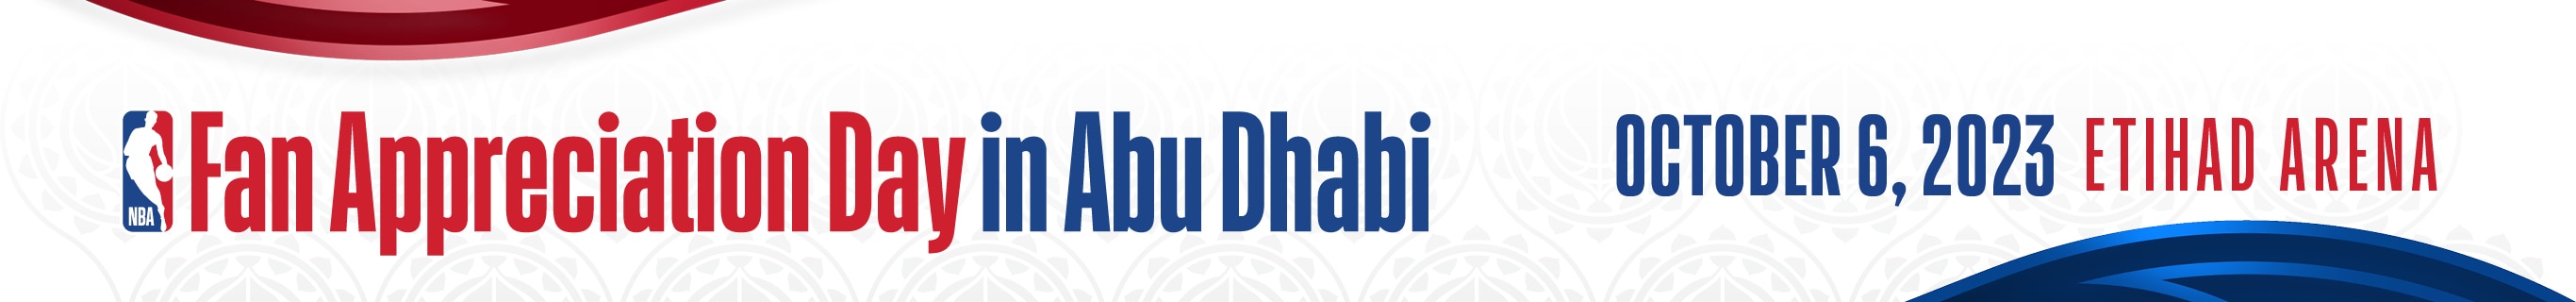 NBA Abu Dhabi Games 2023 at Etihad Arena